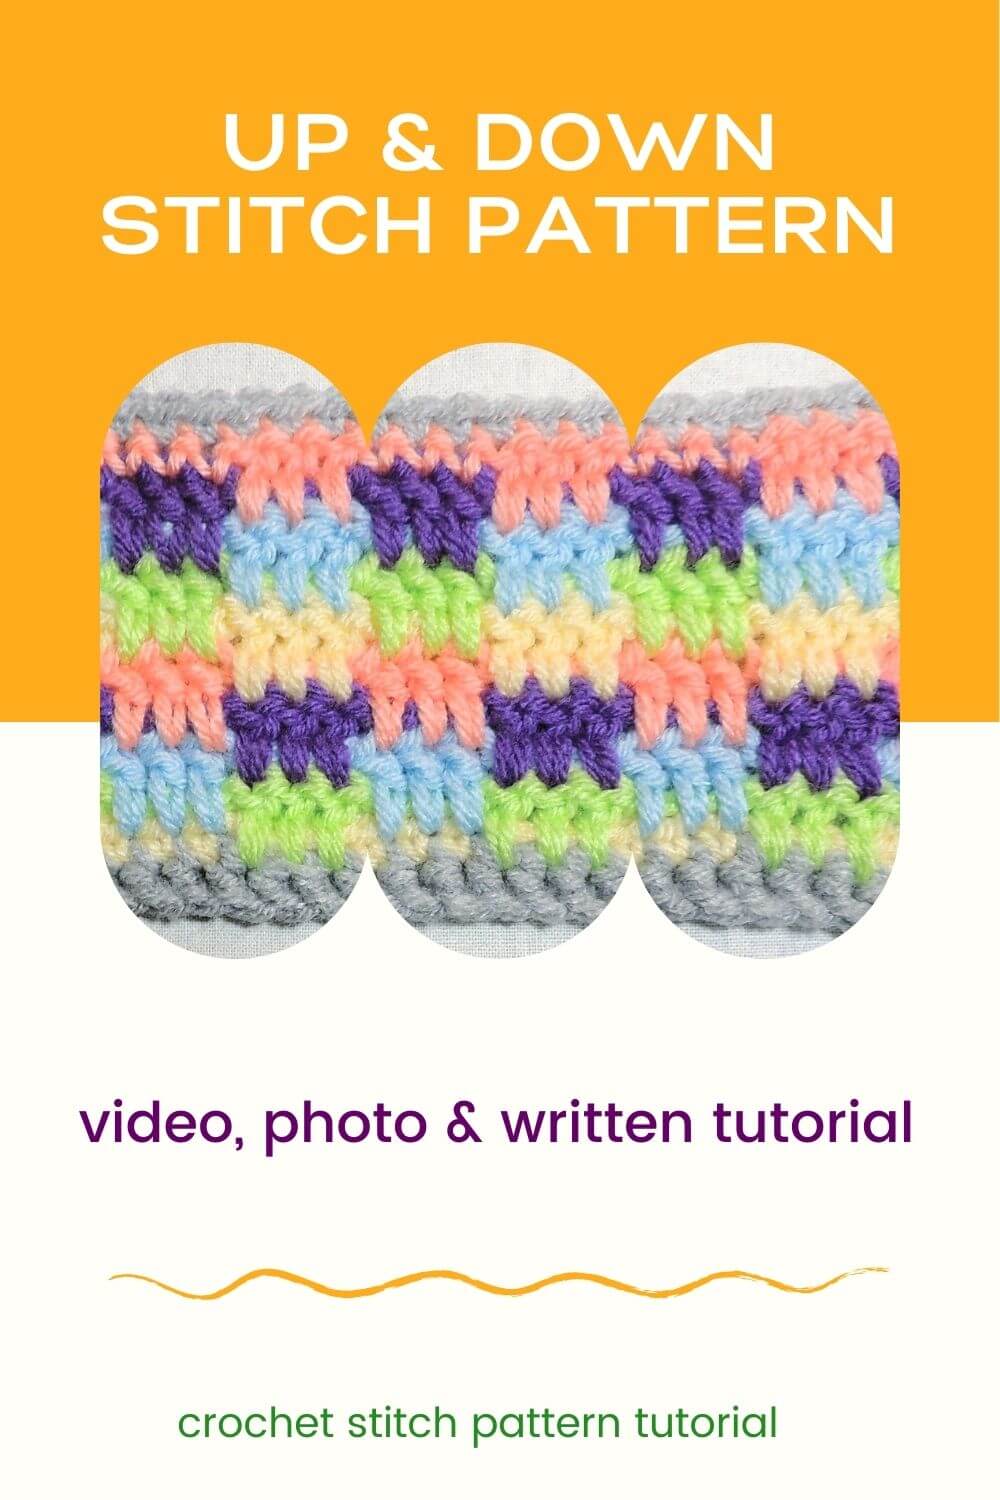 Up & Down Stitch – free crochet stitch pattern tutorial with video